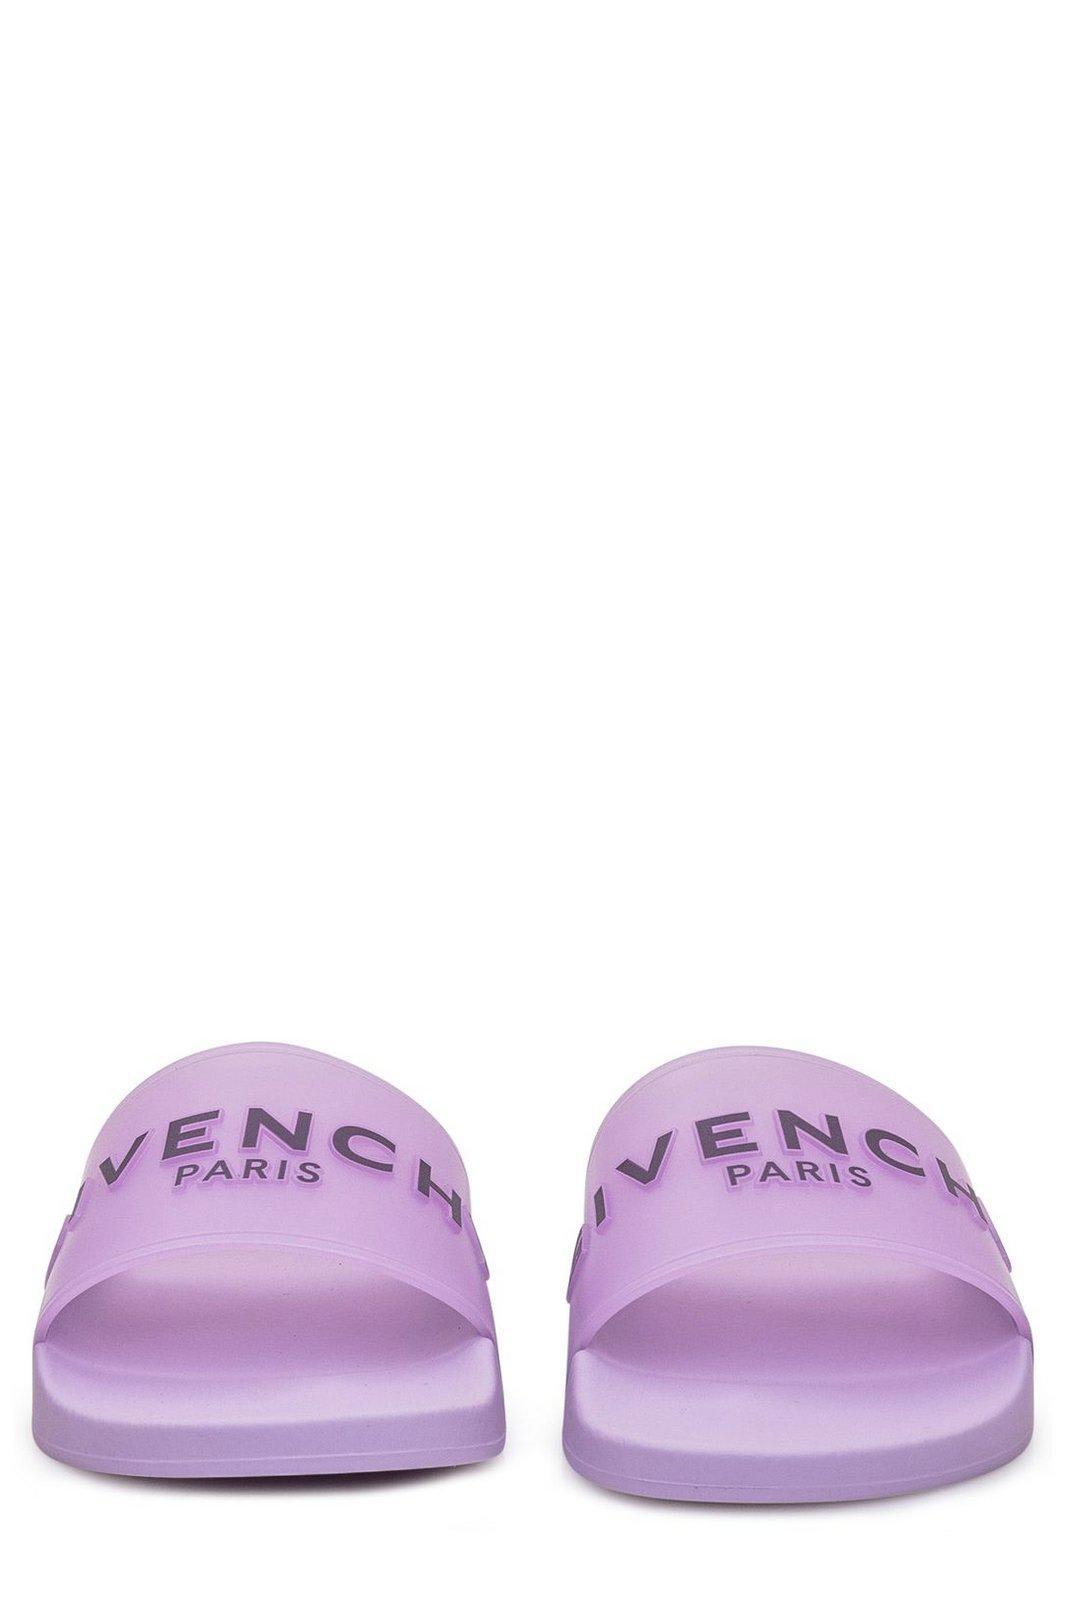 Shop Givenchy Paris Flat Sandals In Lilac